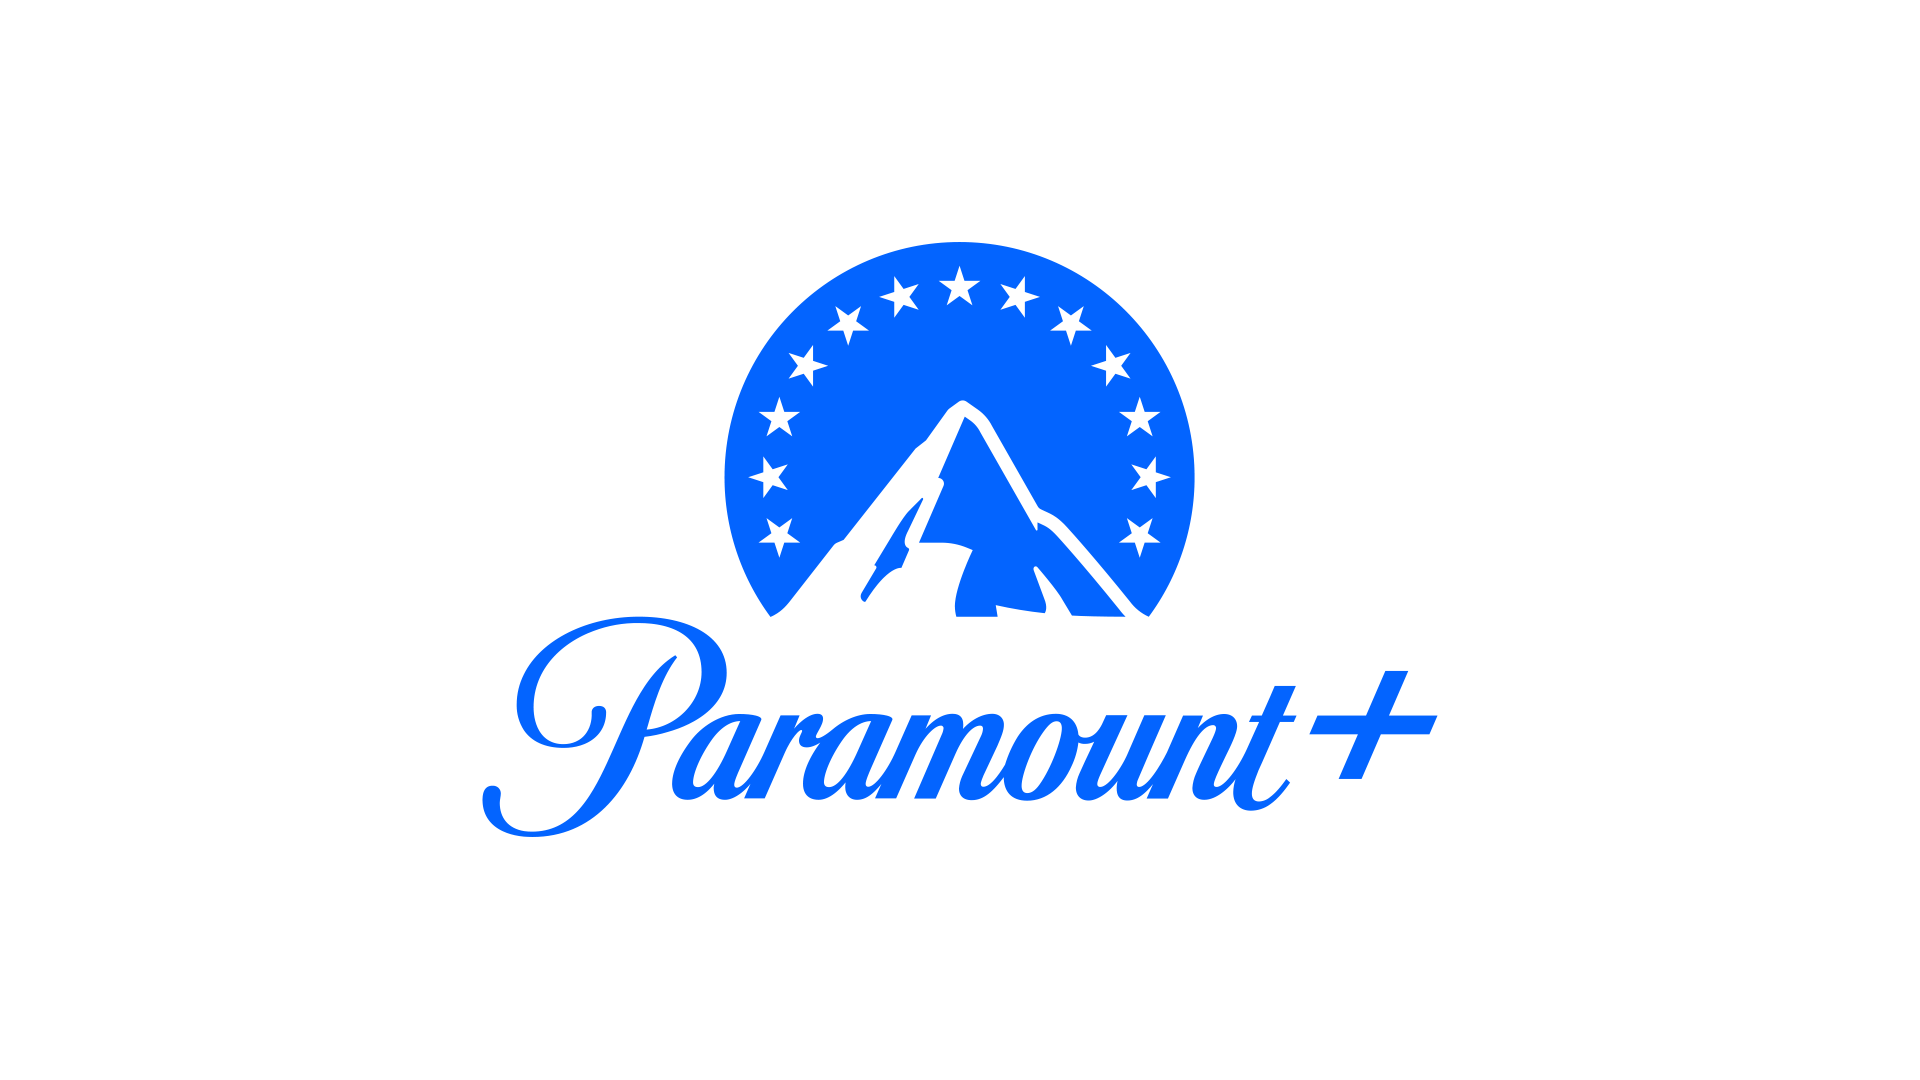 00_Paramount+_2021.png